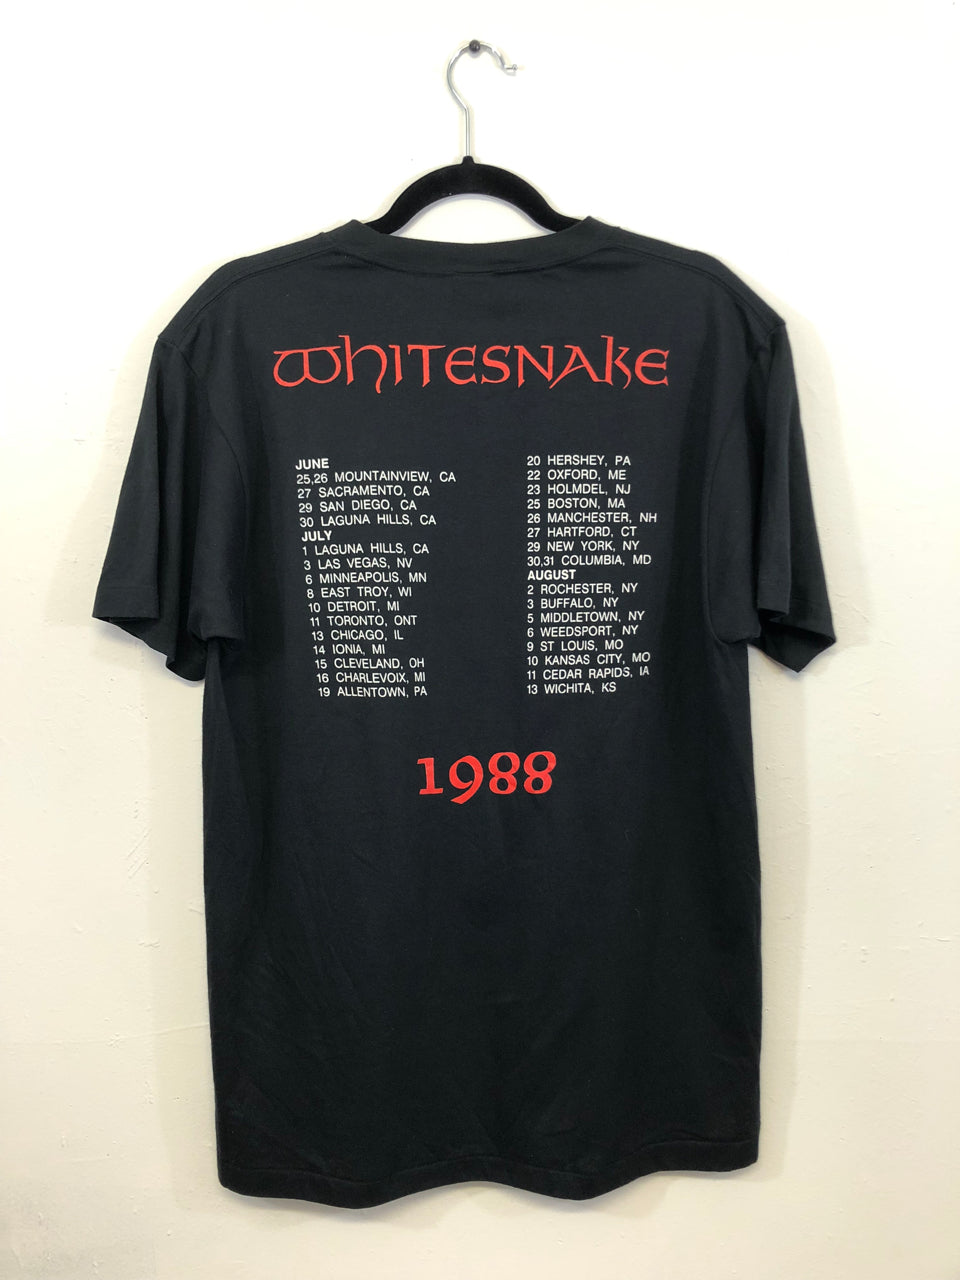 Whitesnake / David Coverdale 1988 Tour T-Shirt